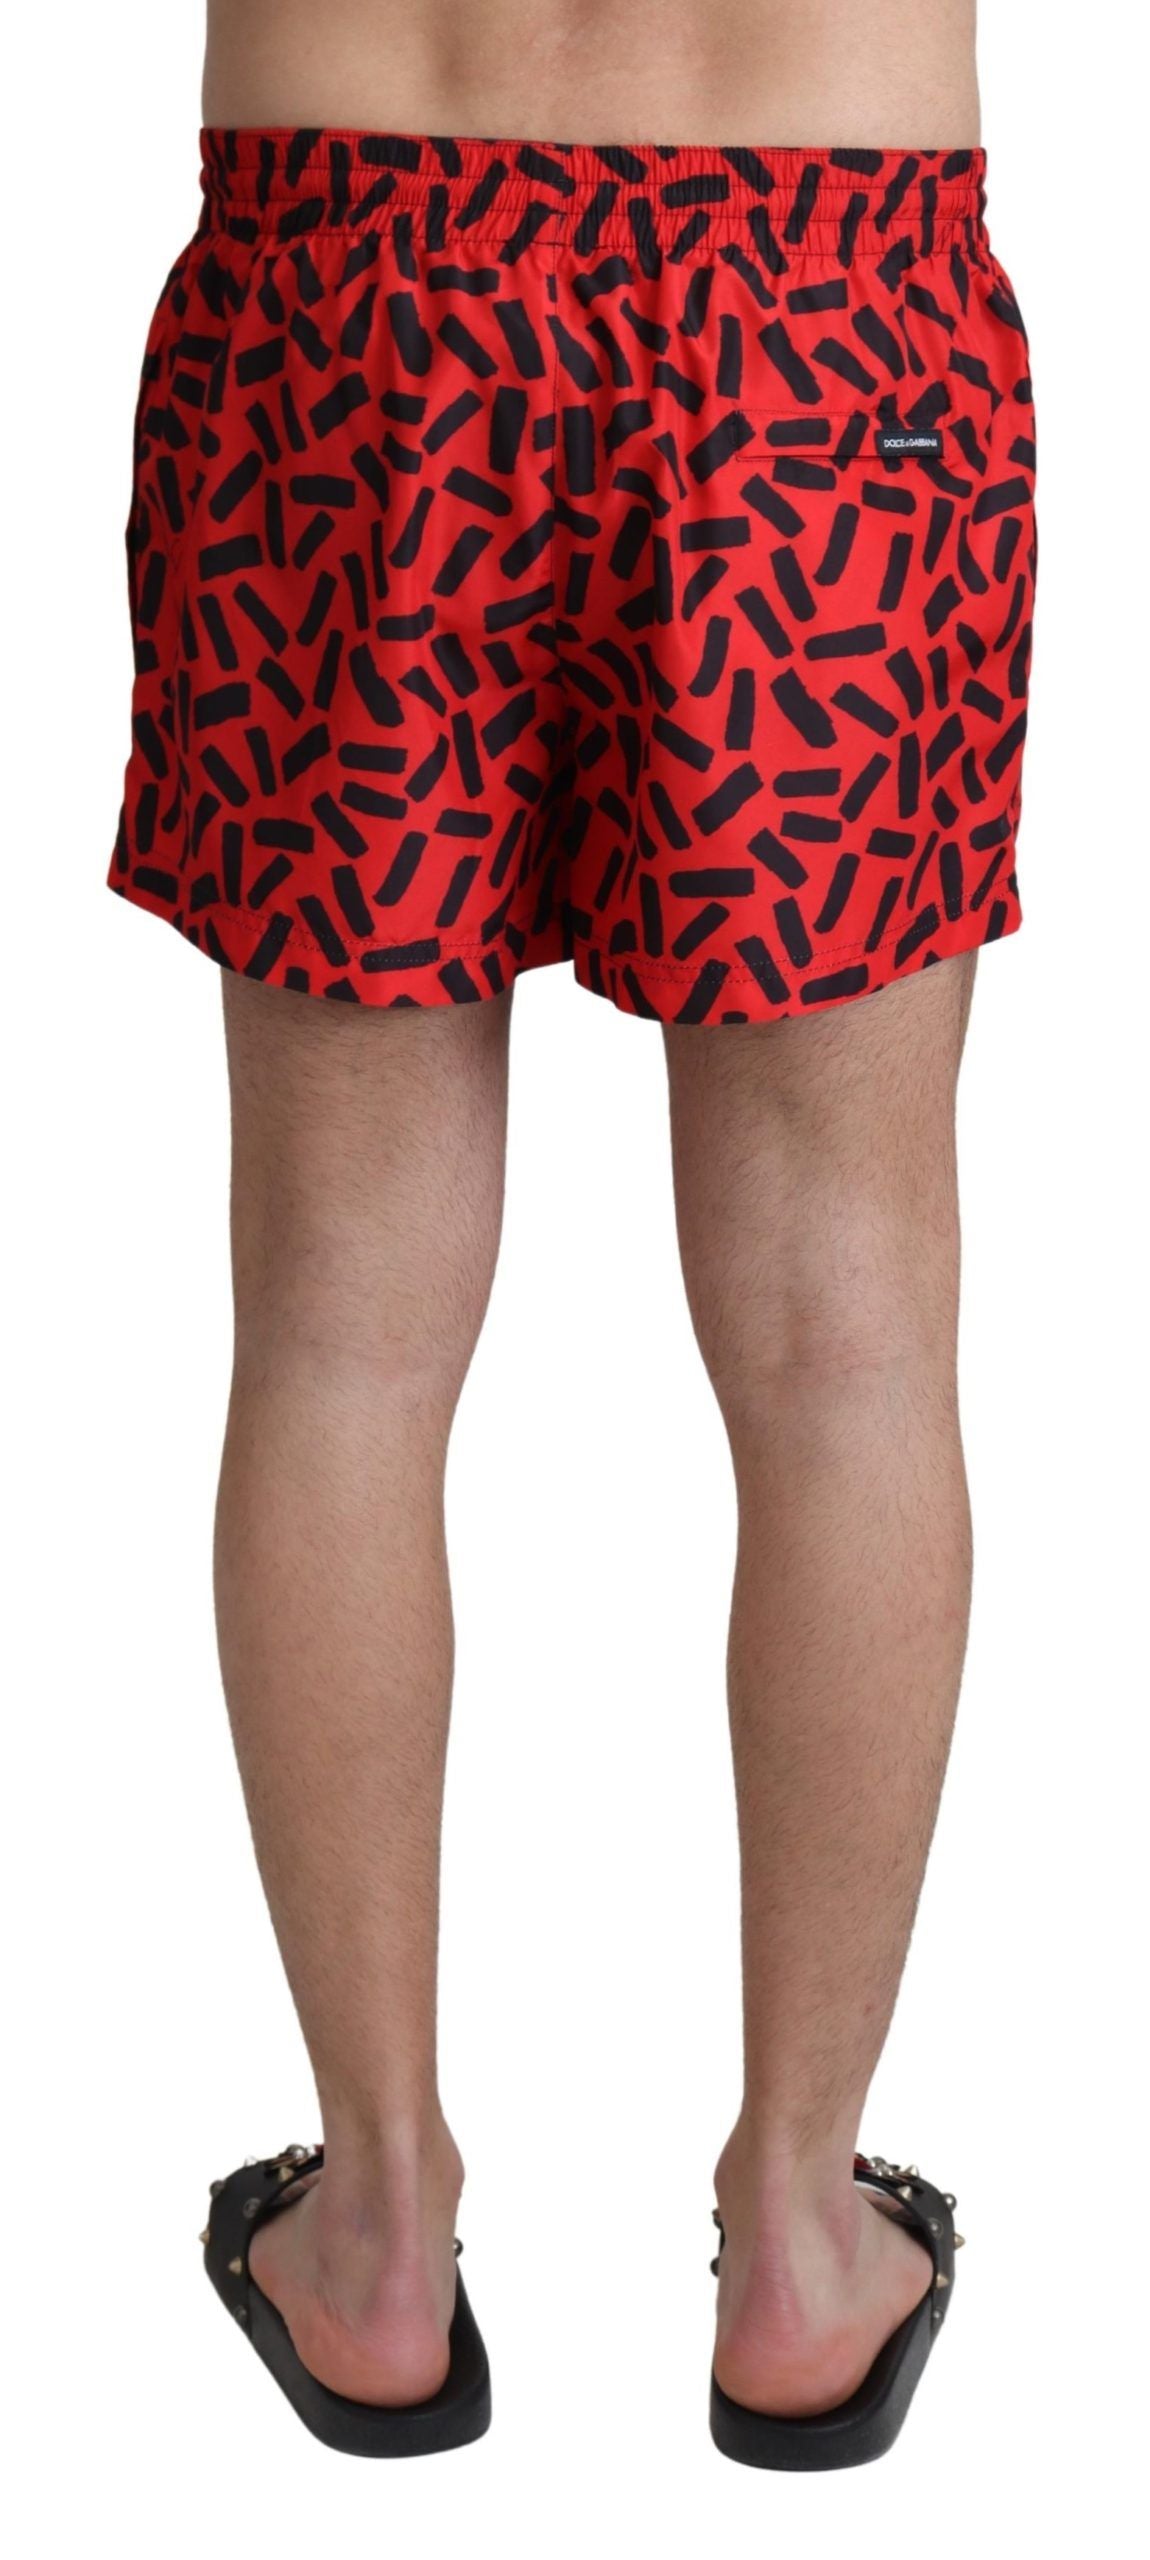 Dolce & Gabbana Red Patterned Beachwear Shorts Swimwear